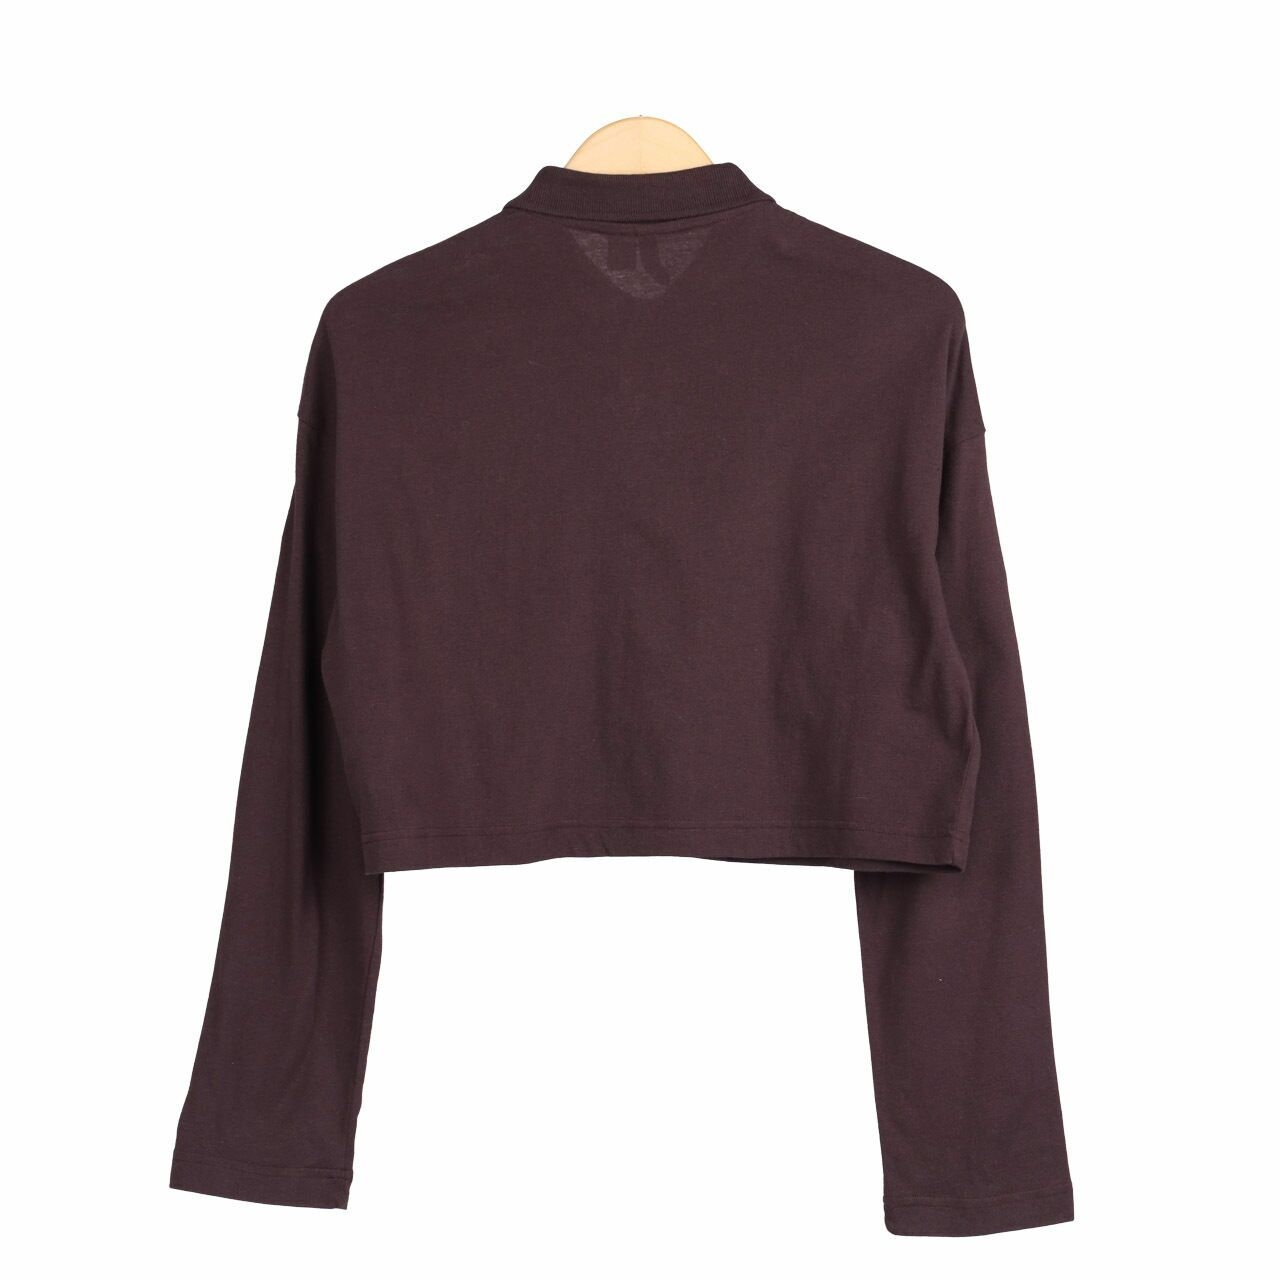 H&M Dark Brown Long Sleeve Polo Shirt